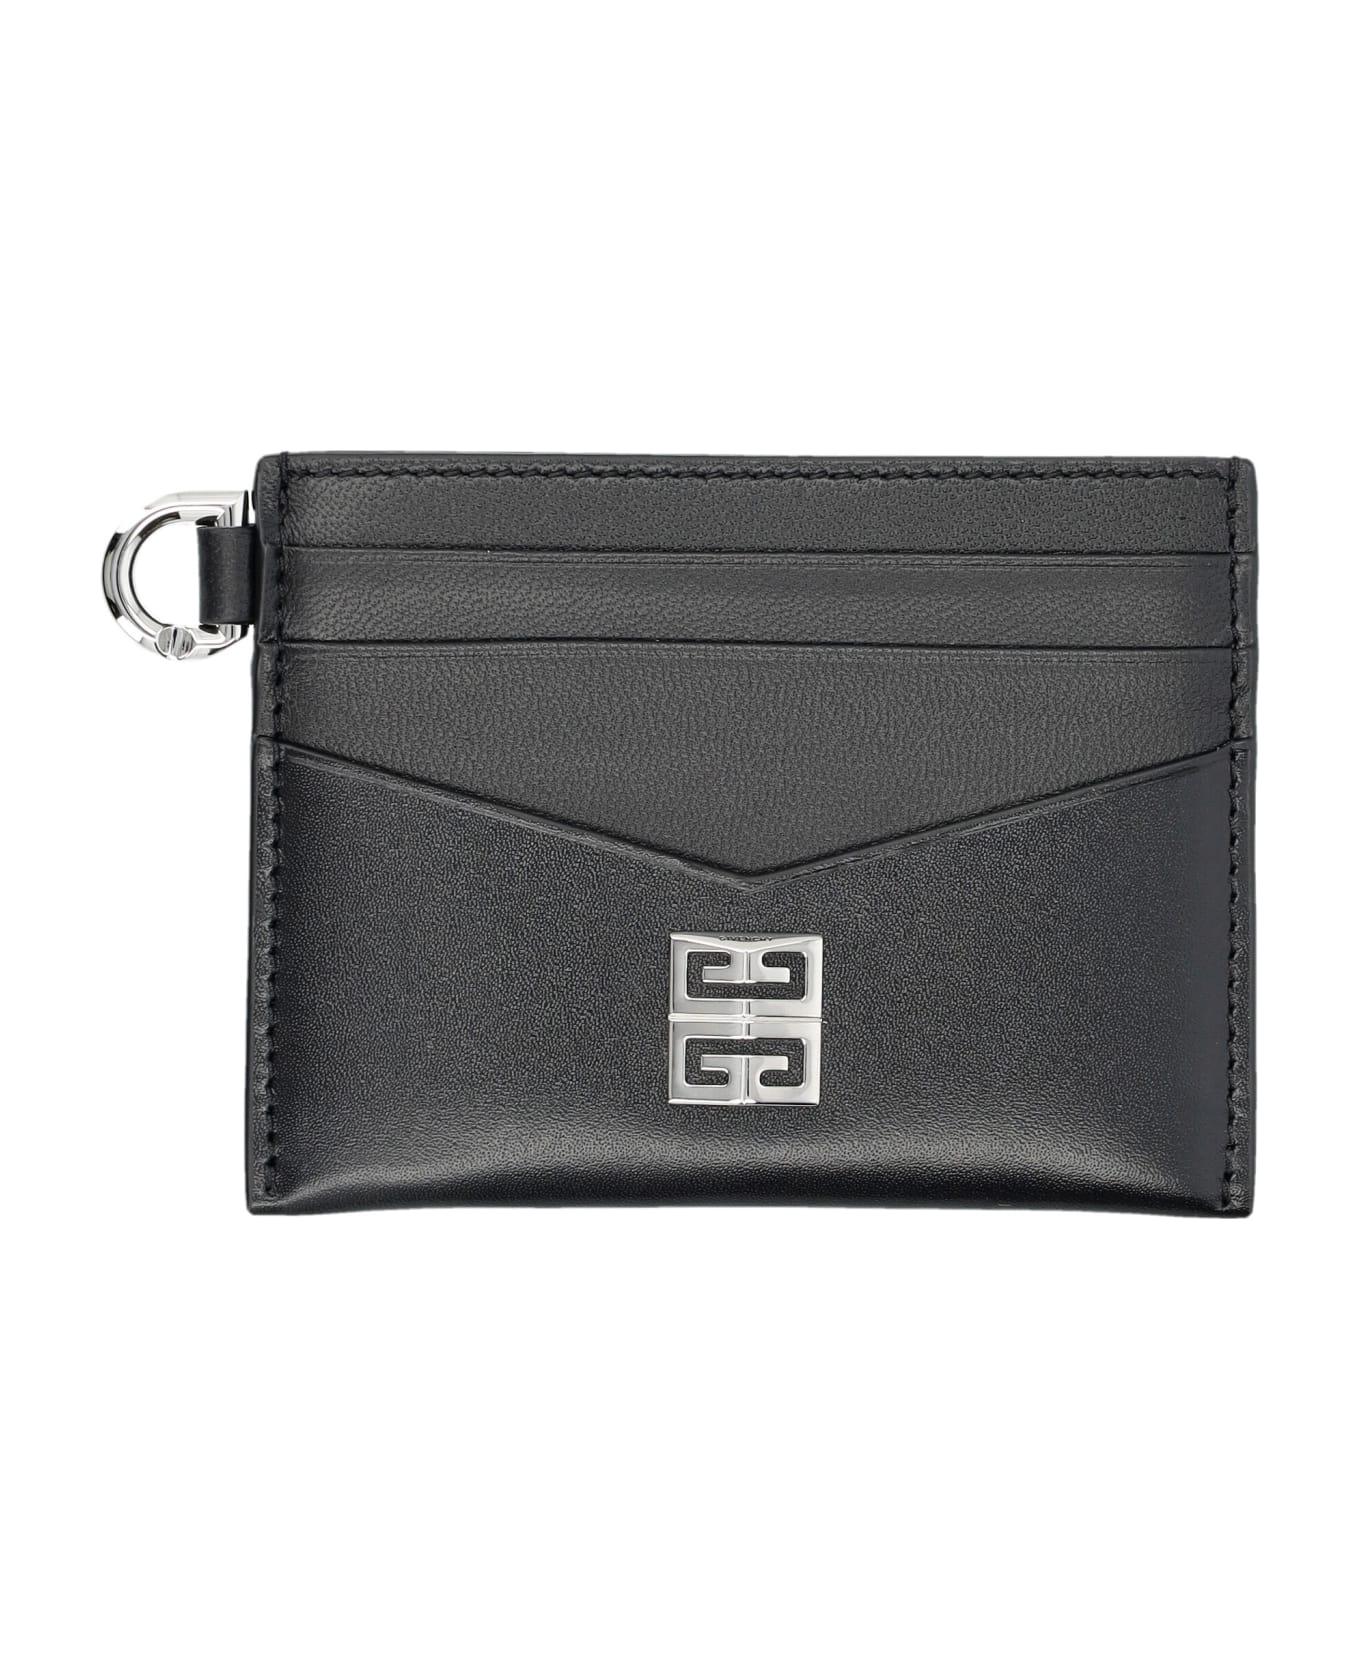 Givenchy 4g- 2x3 Cc Cardholder - BLACK